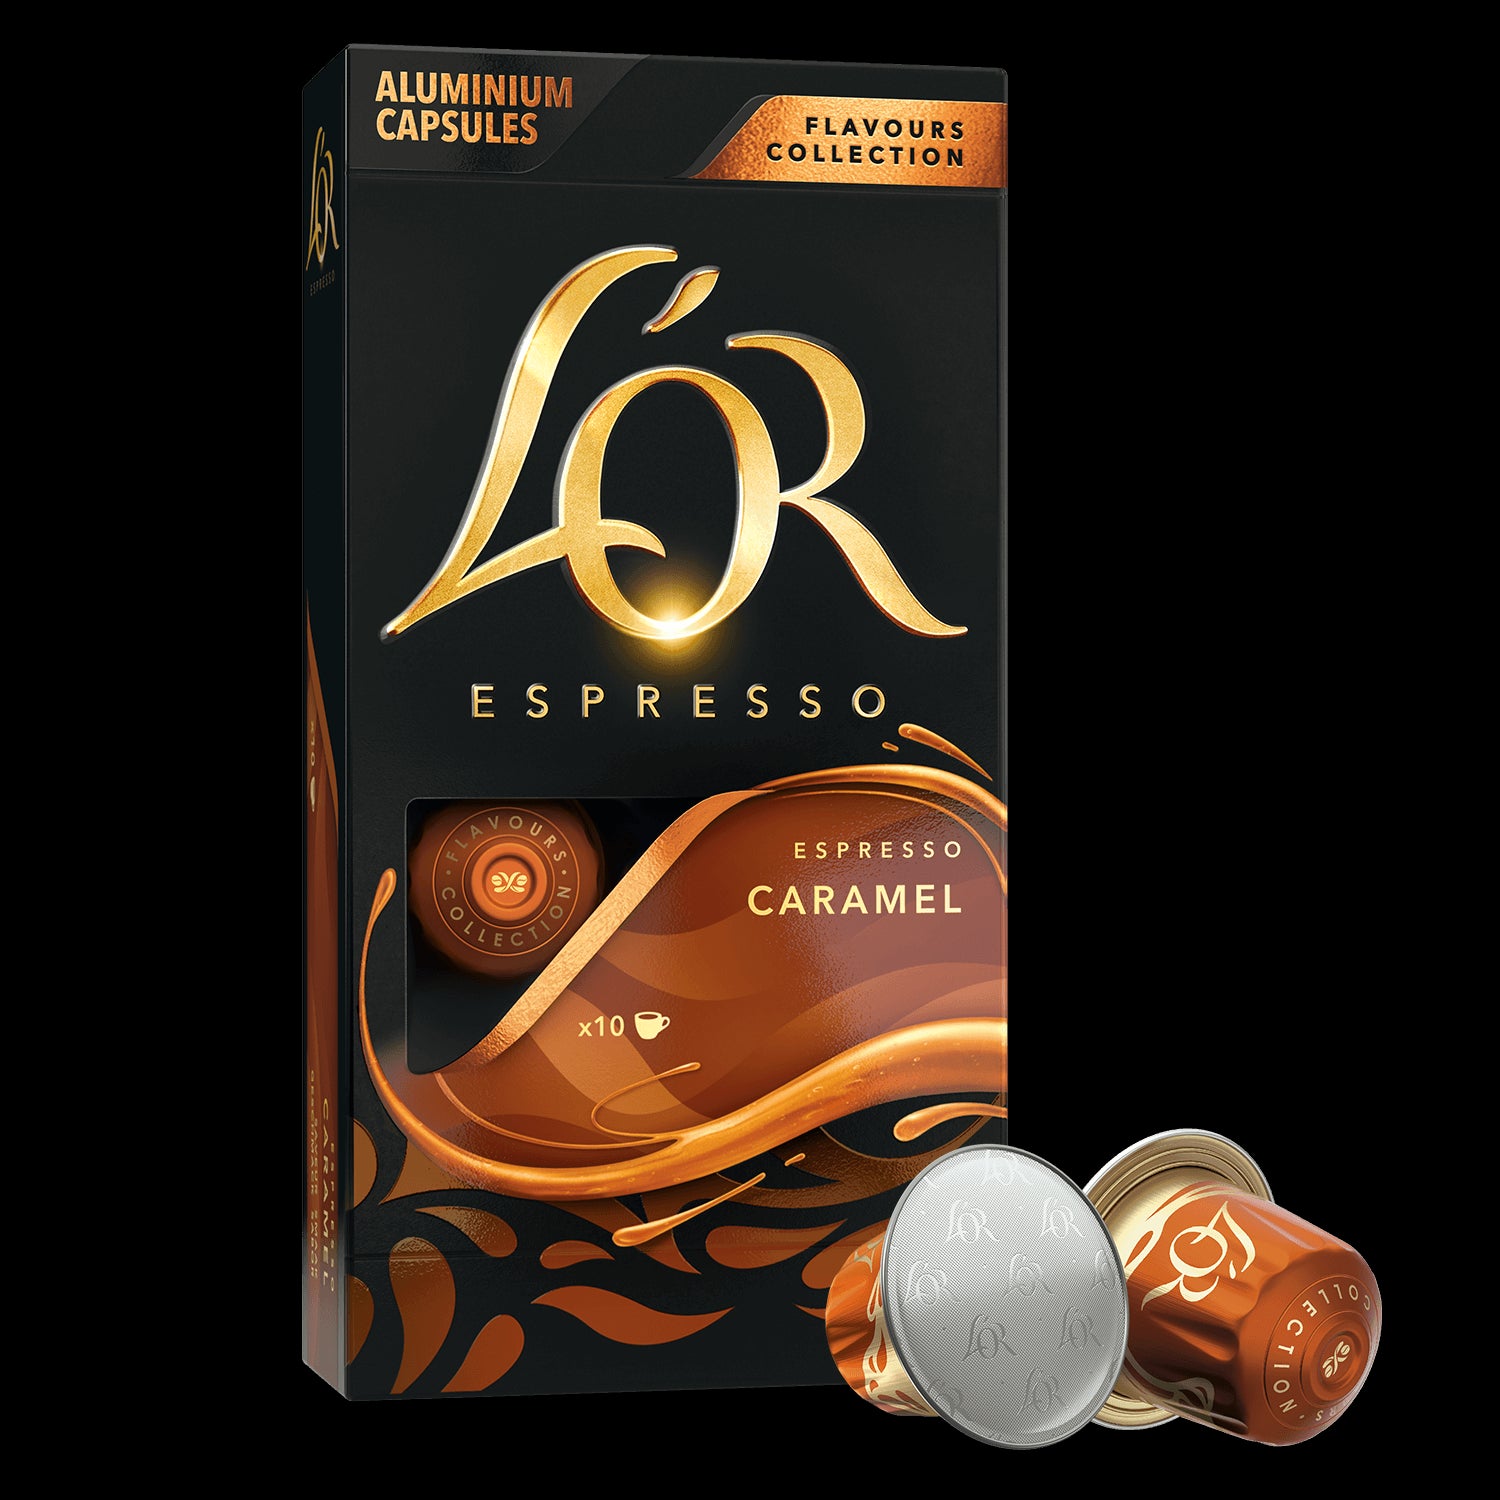 L'Or Espresso L'Or Café Capsules Splendente - Group Bech